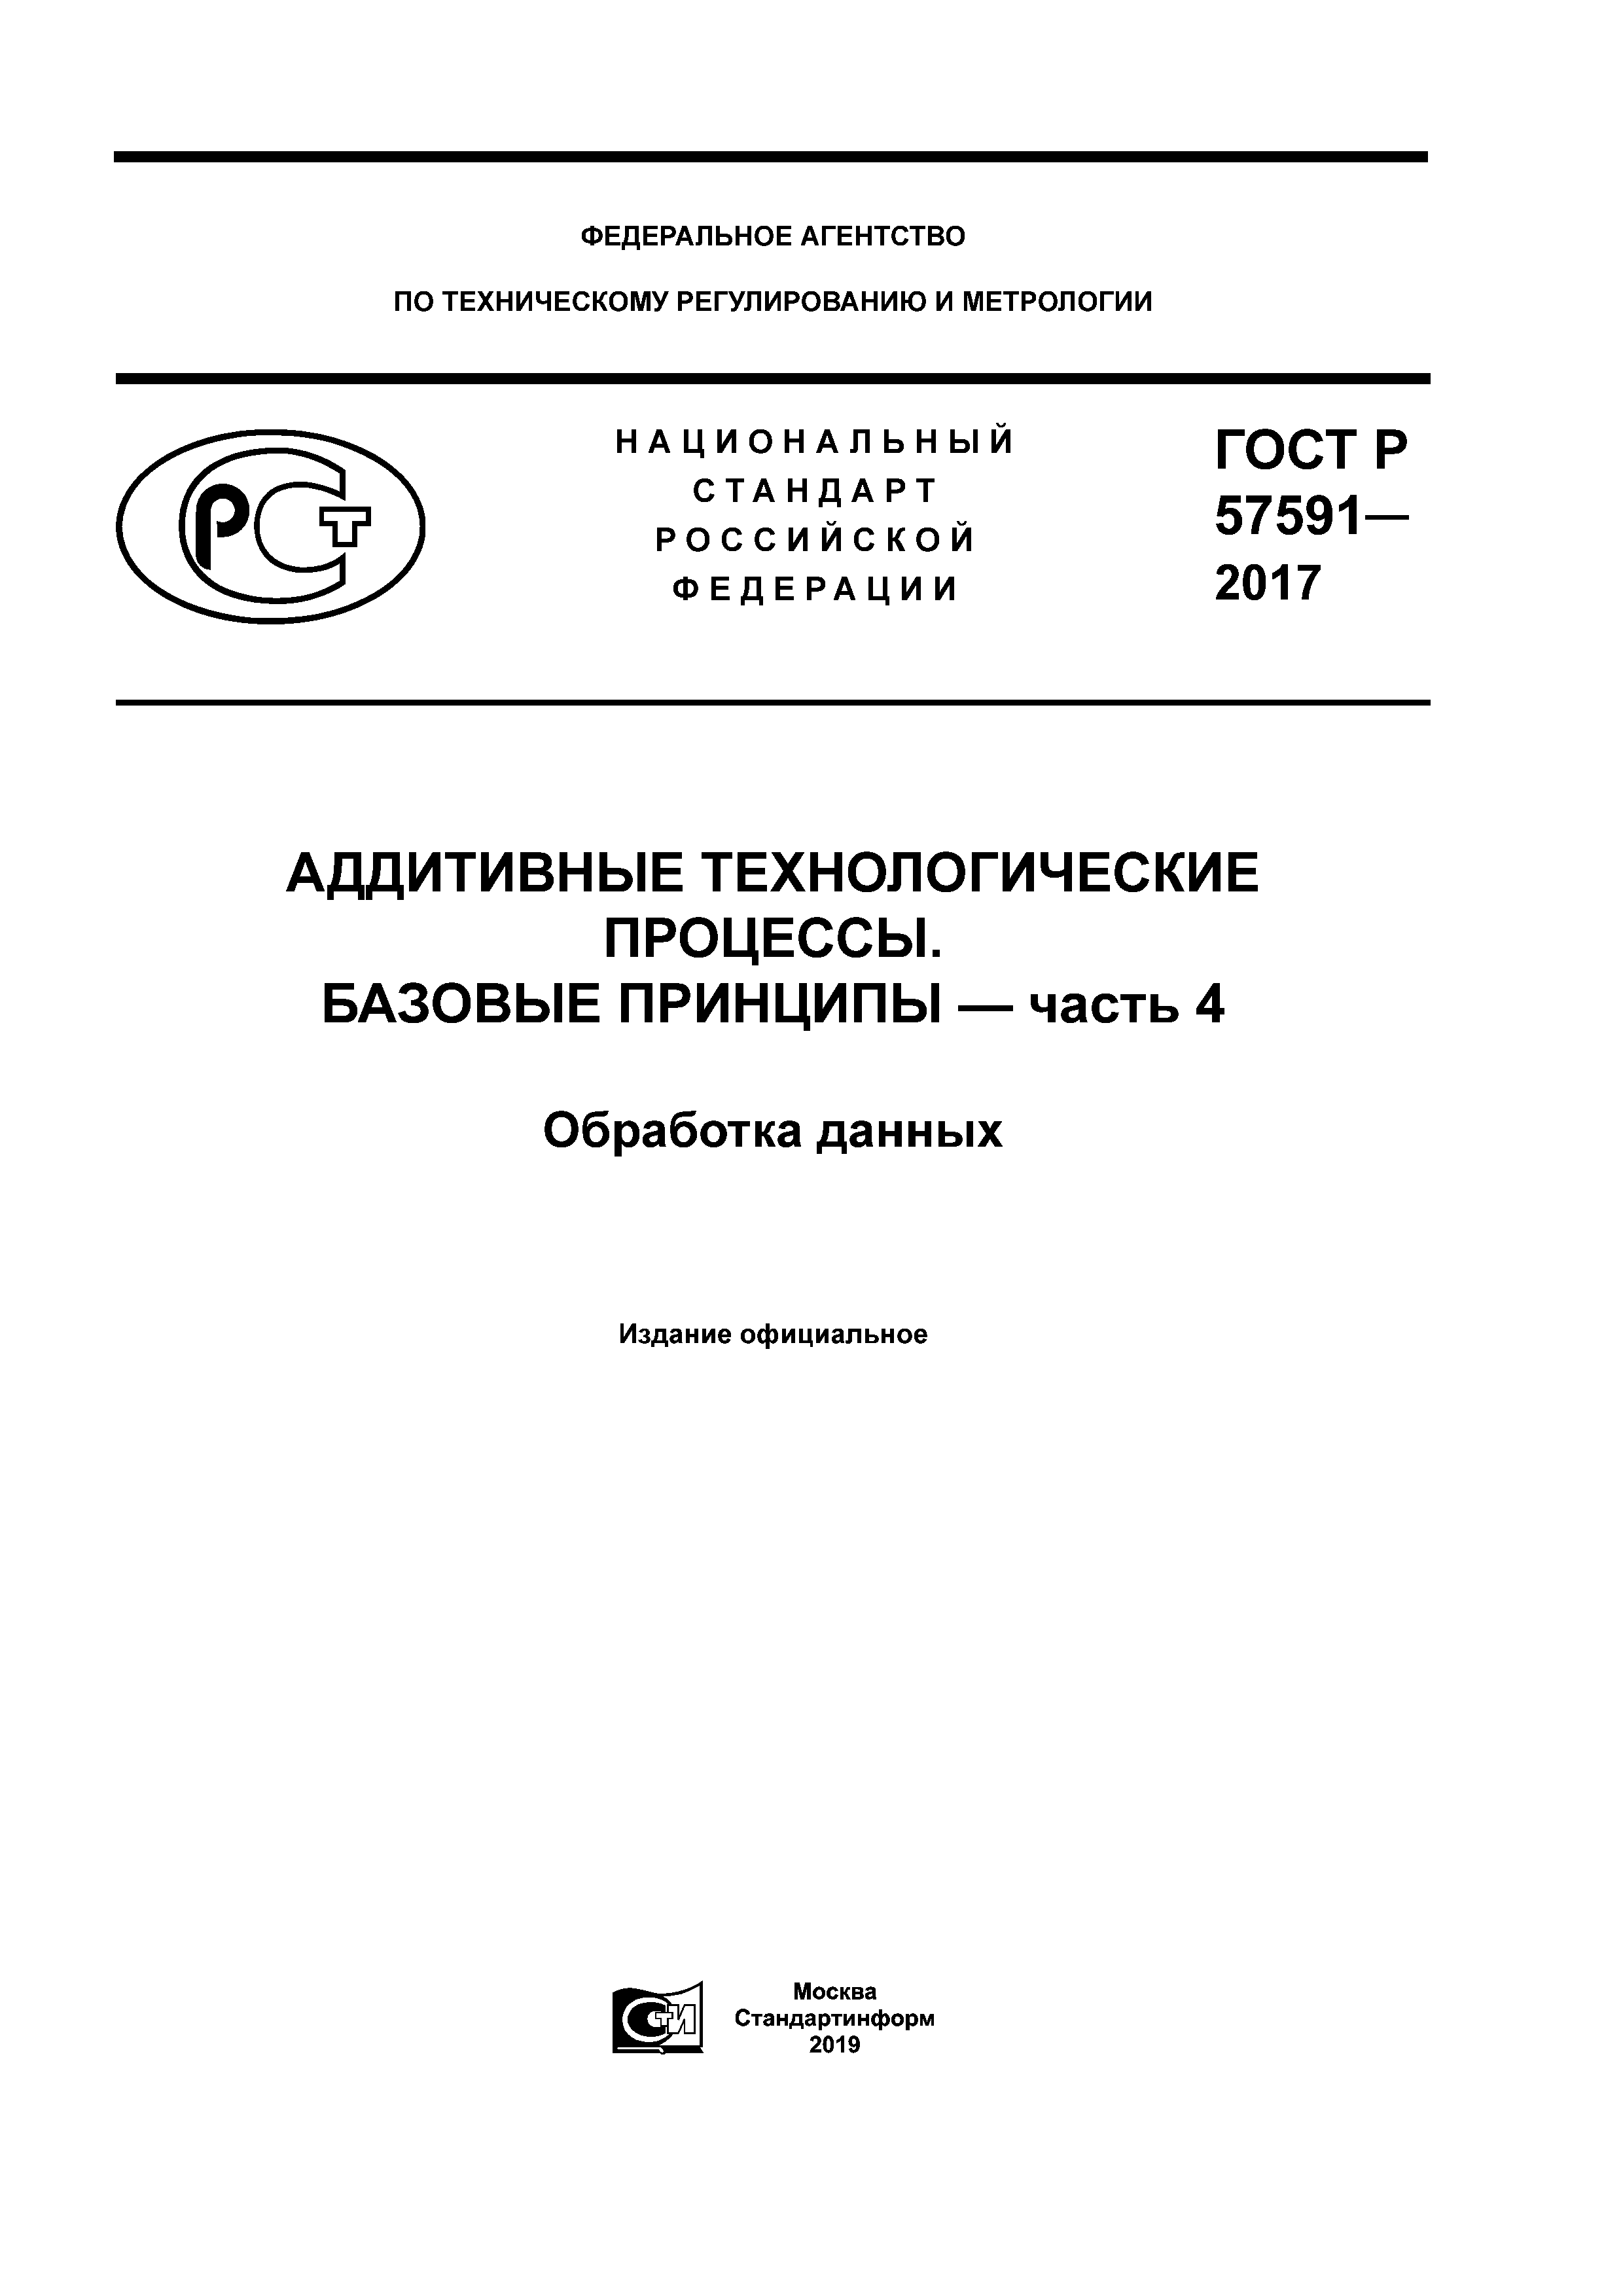 ГОСТ Р 57591-2017